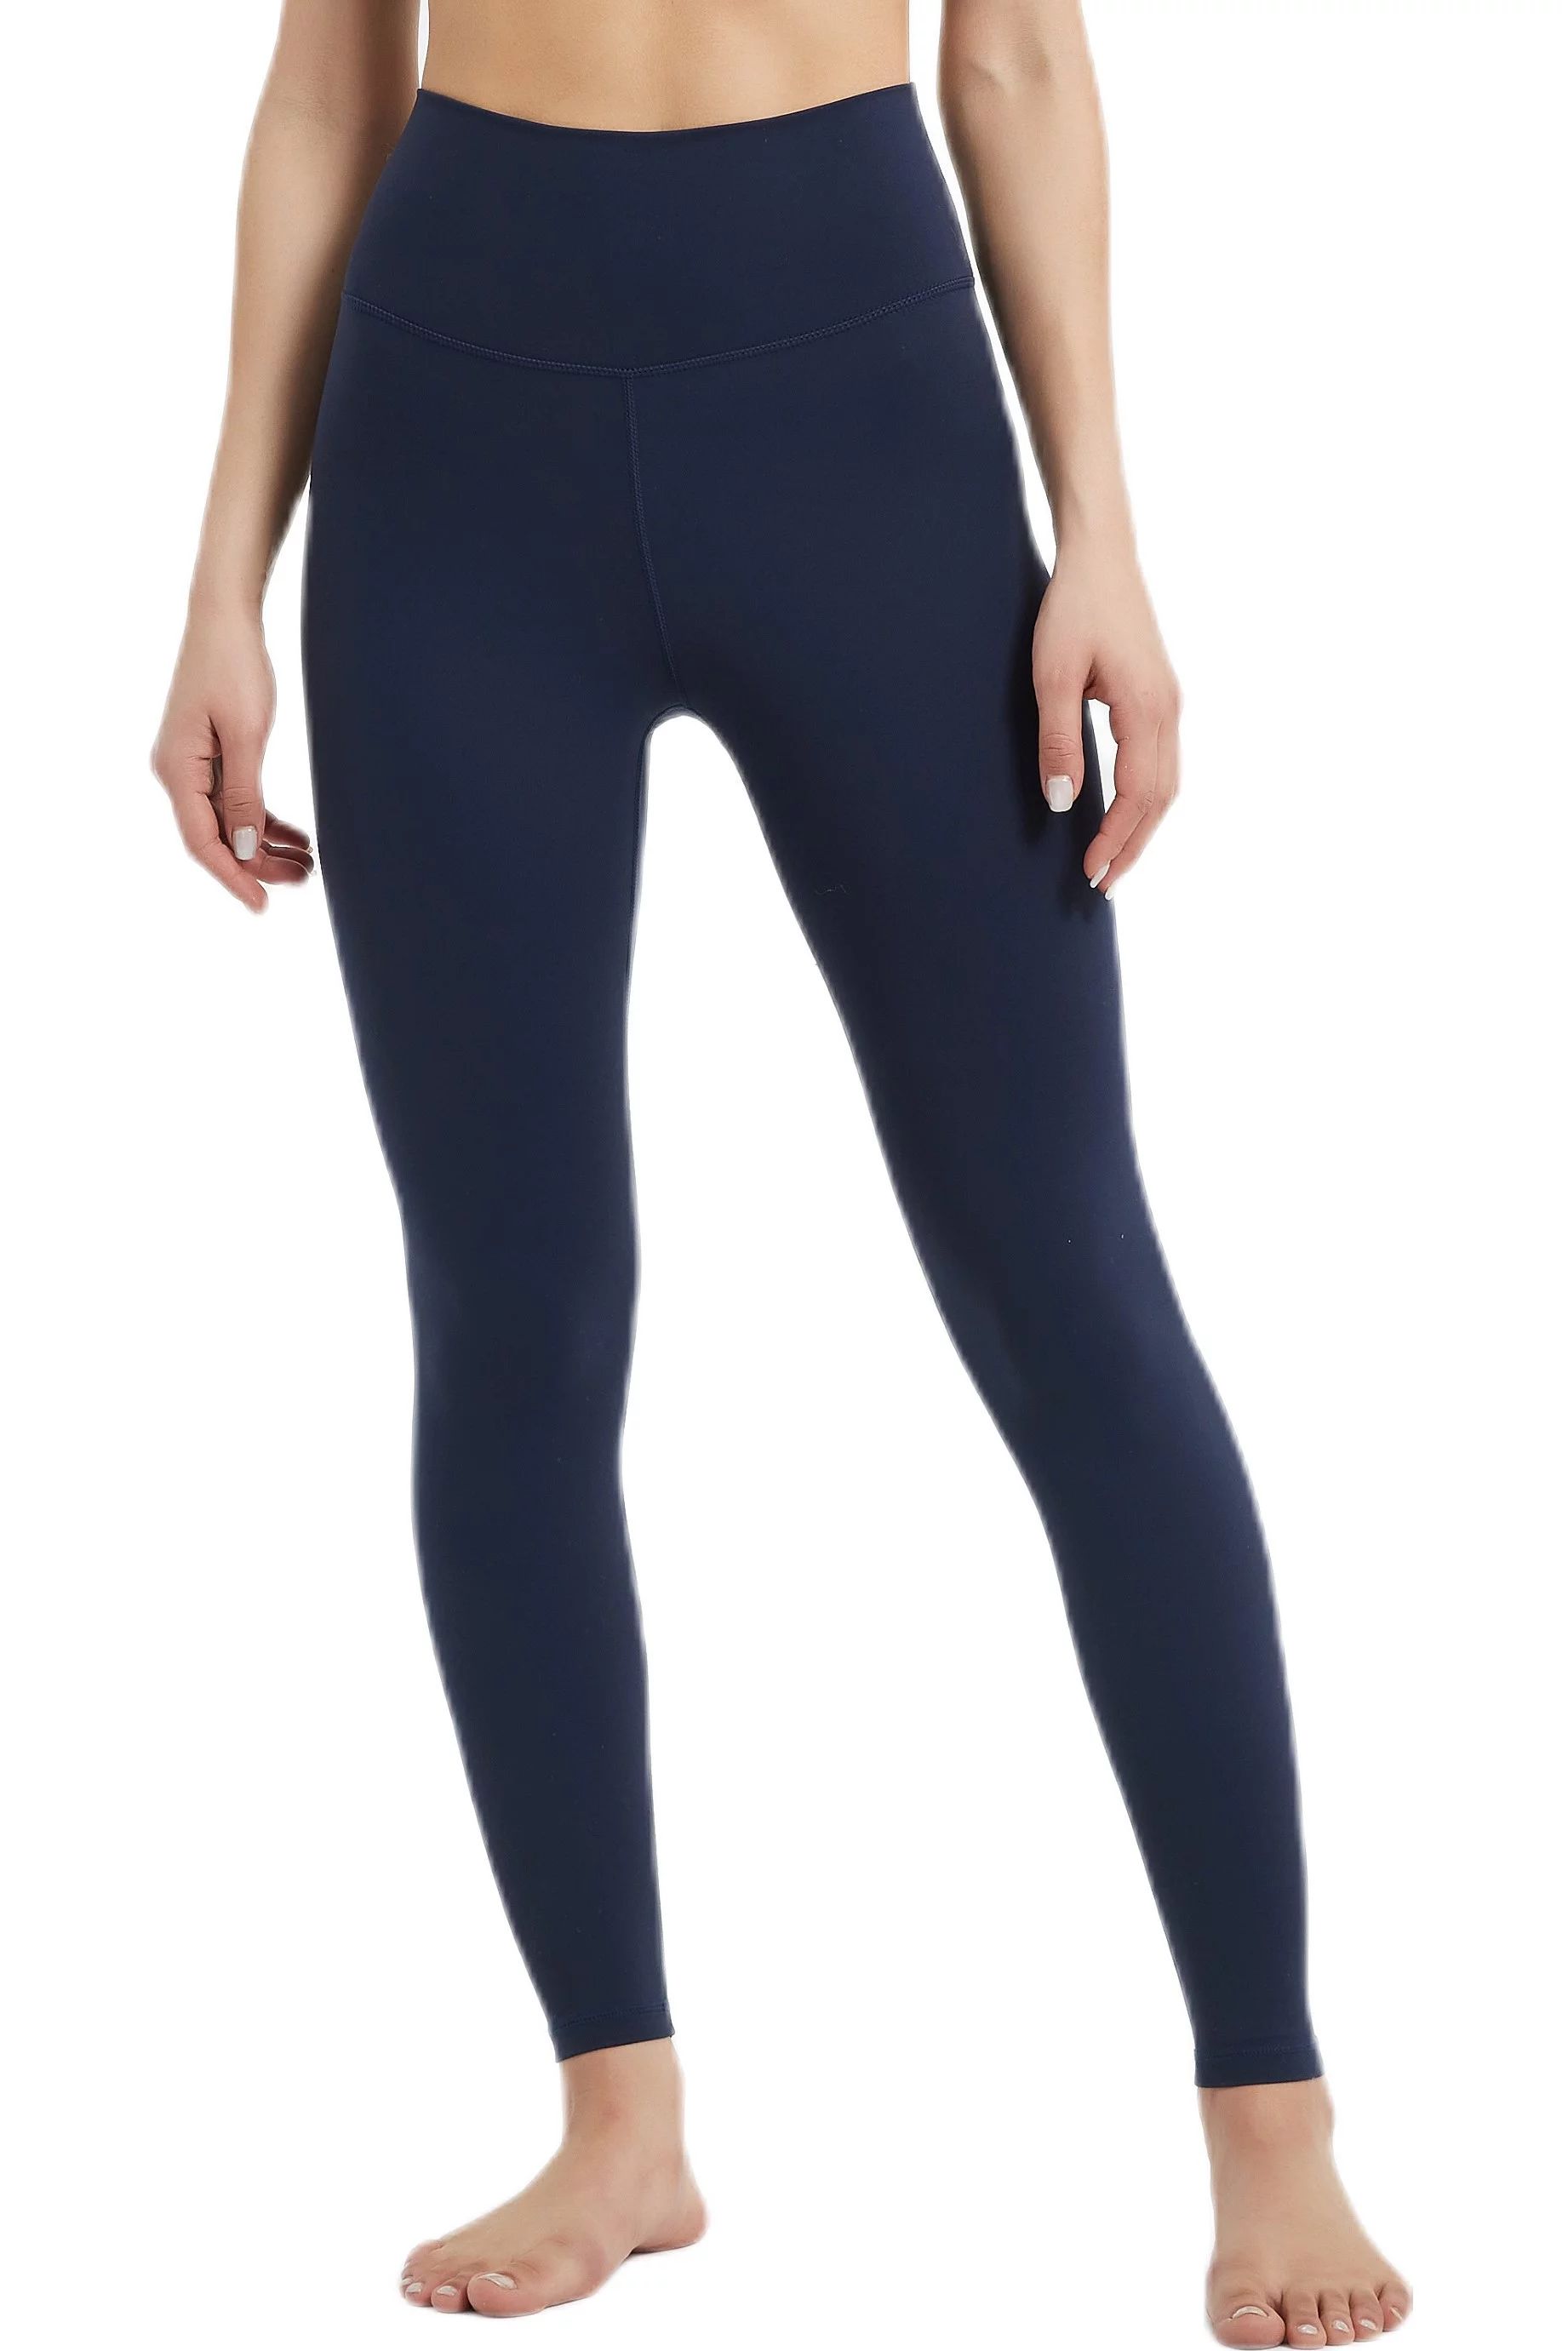 UNCIA ACTIVE Women's Leggings High Waisted Yoga Pants Workout Leggings for Women Tummy Control So... | Walmart (US)